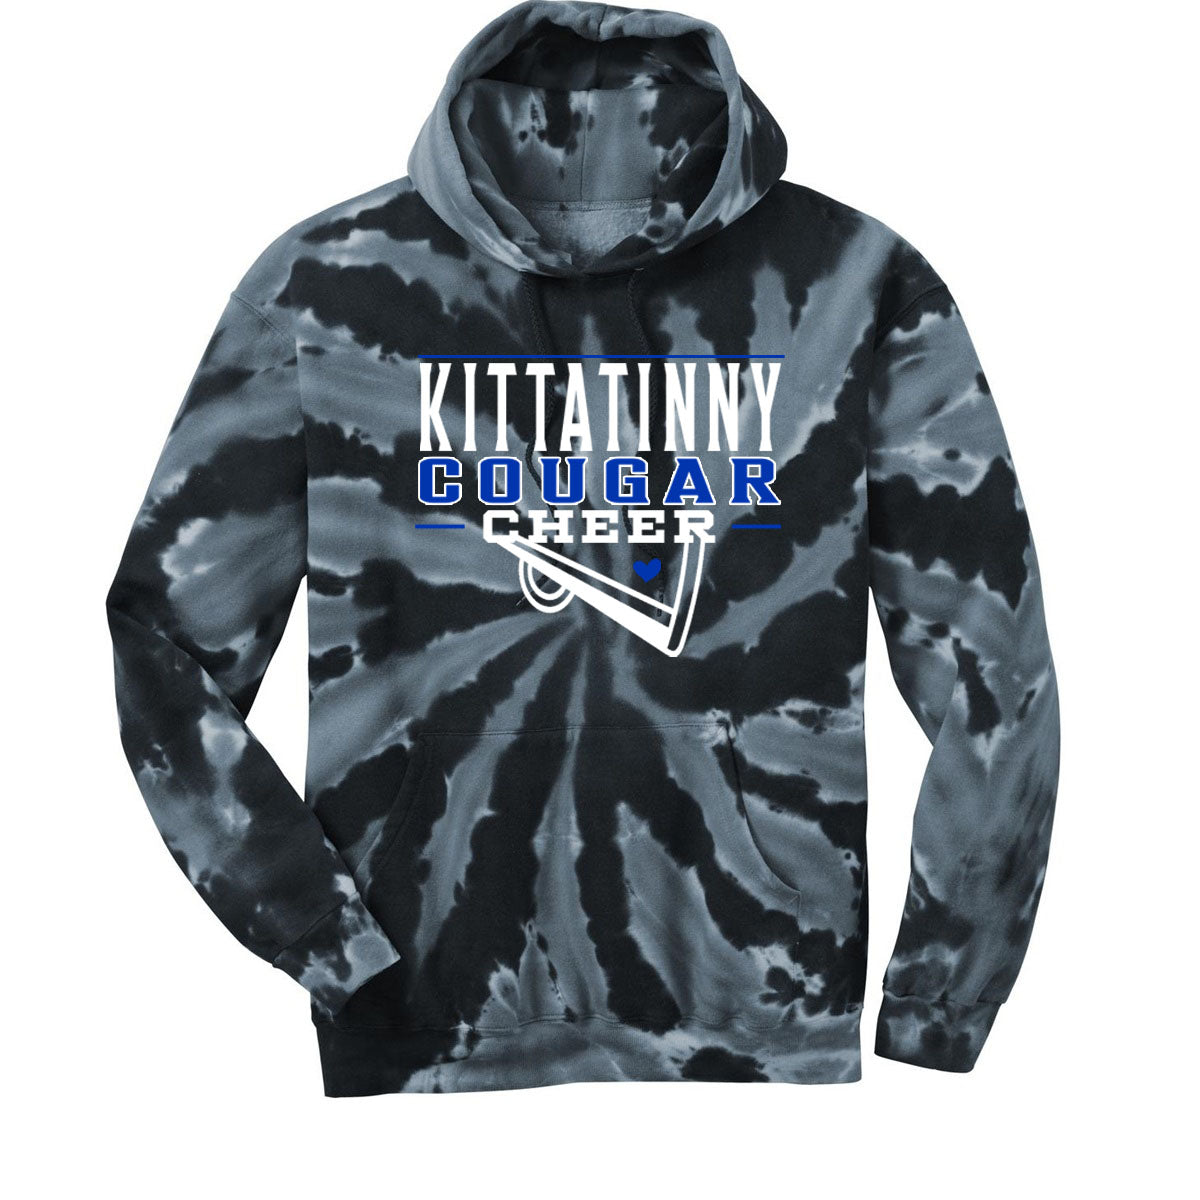 Kittatinny Cheer Tie-Dye Hooded Sweatshirt Design 11